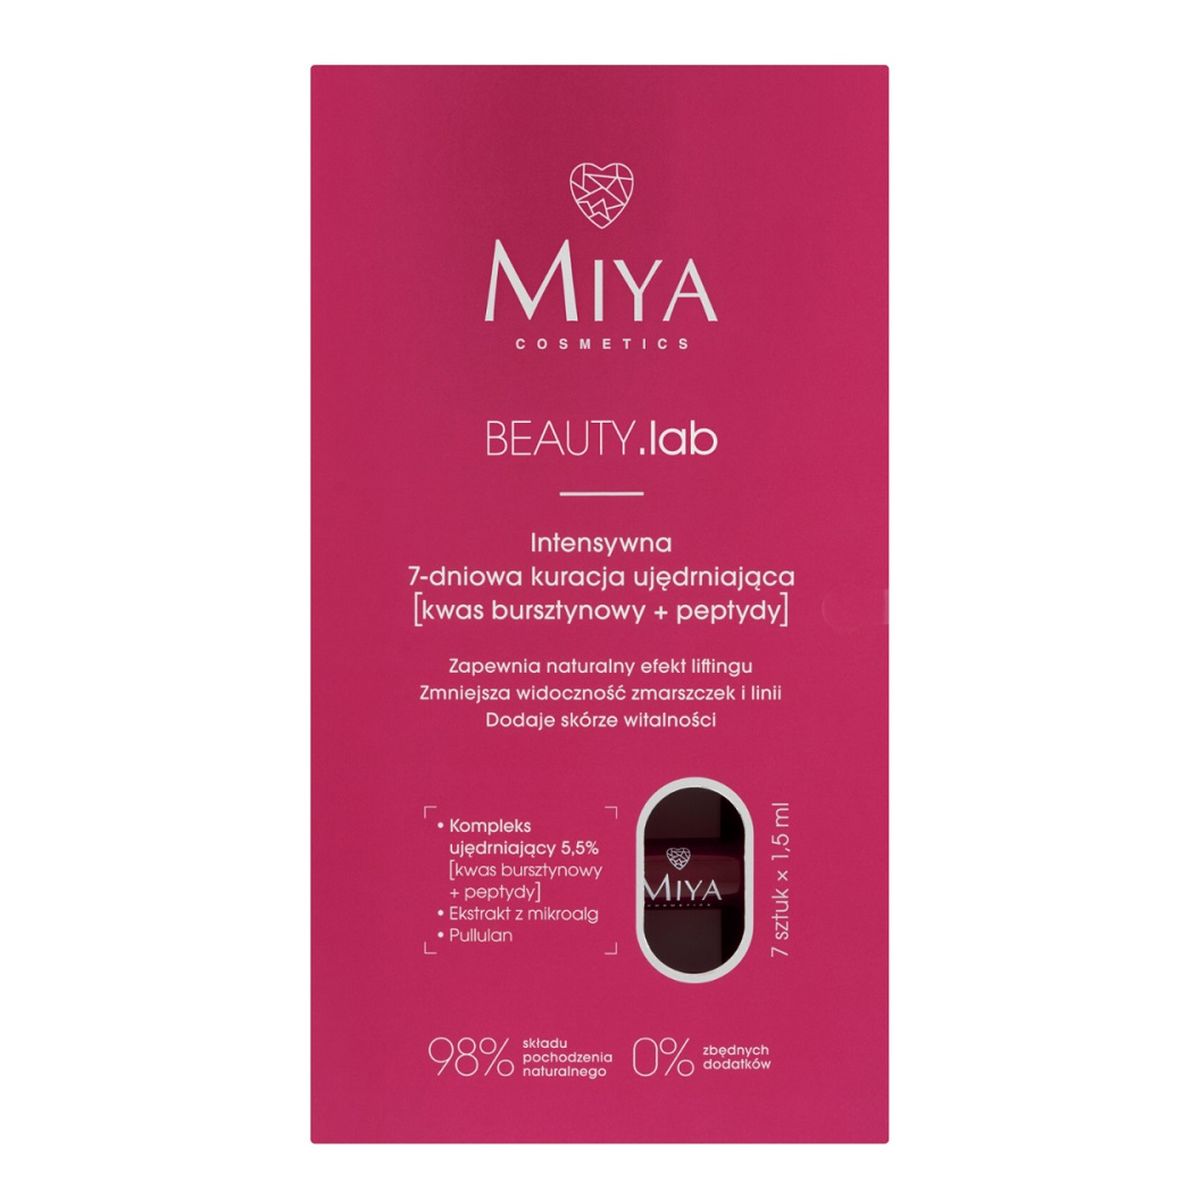 Miya Cosmetics Beauty.lab intensywna 7-dniowa kuracja ujędrniająca &lsqb;kwas bursztynowy + peptydy&rsqb; 7x1.